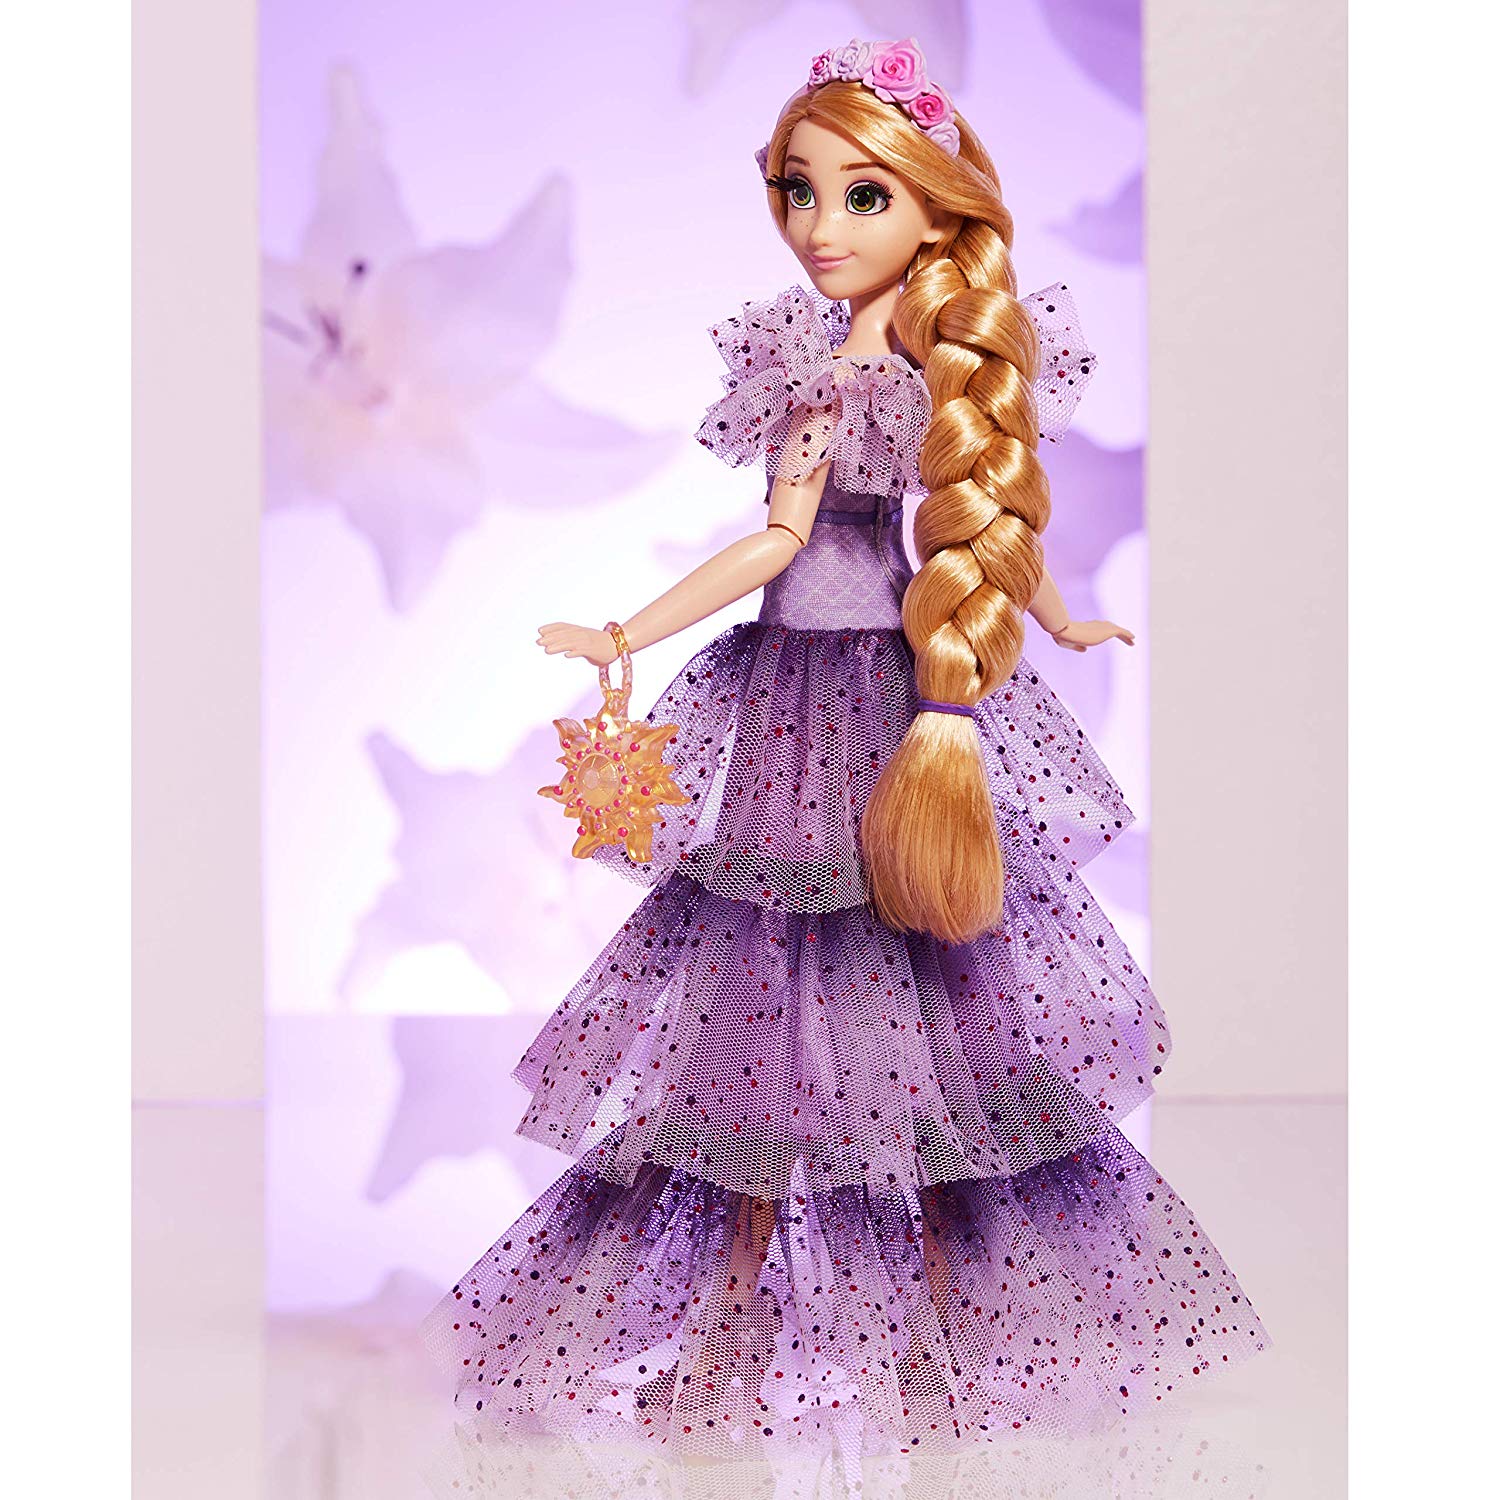 Disney Princess Style Series Rapunzel doll stock photos